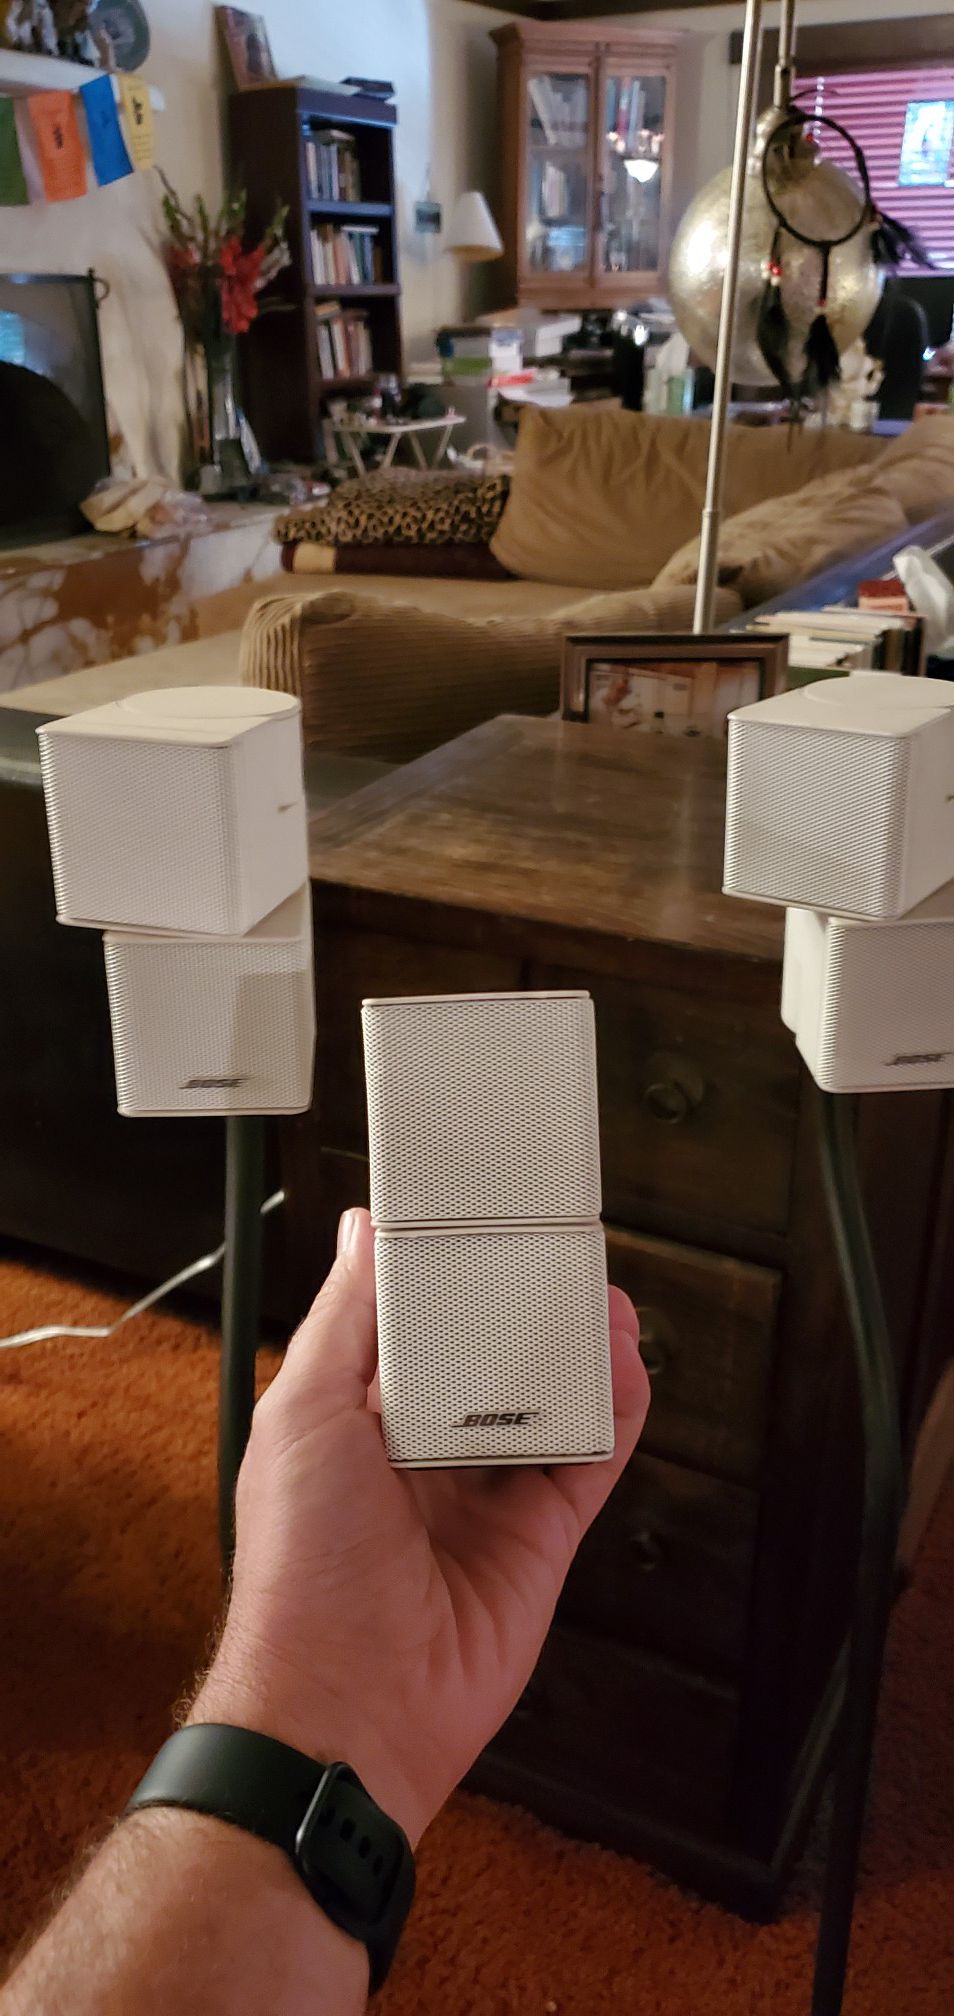 Bose surround sound double mini cubes high quality sound!